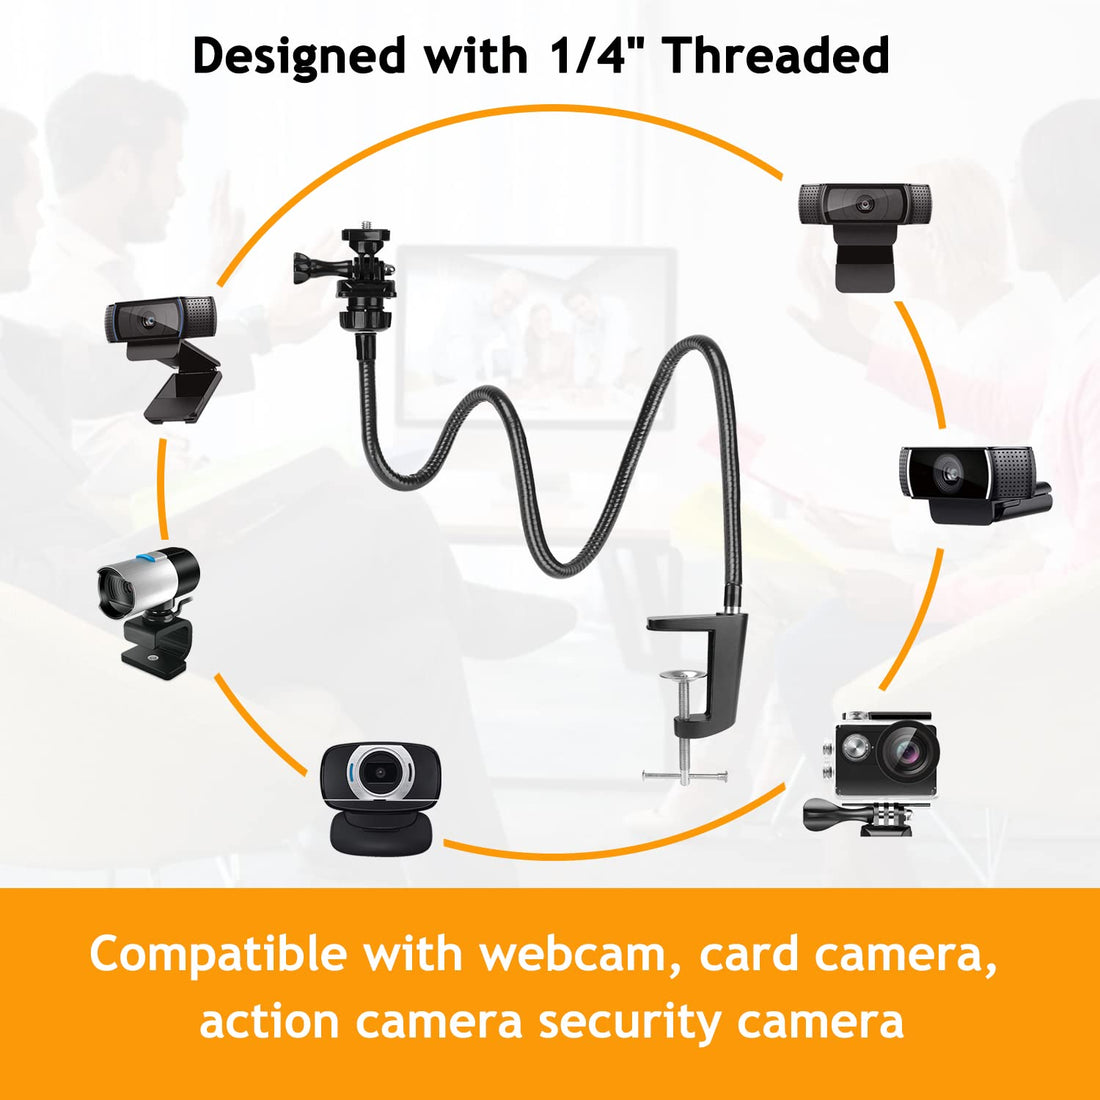 25 Inch Webcam Stand - Enhanced Desk Jaw Clamp with Flexible Gooseneck Stand for Logitech Webcam C920,C922,C922x,C930,C615,C925e,Brio 4K by AMADA HOMEFURNISHING